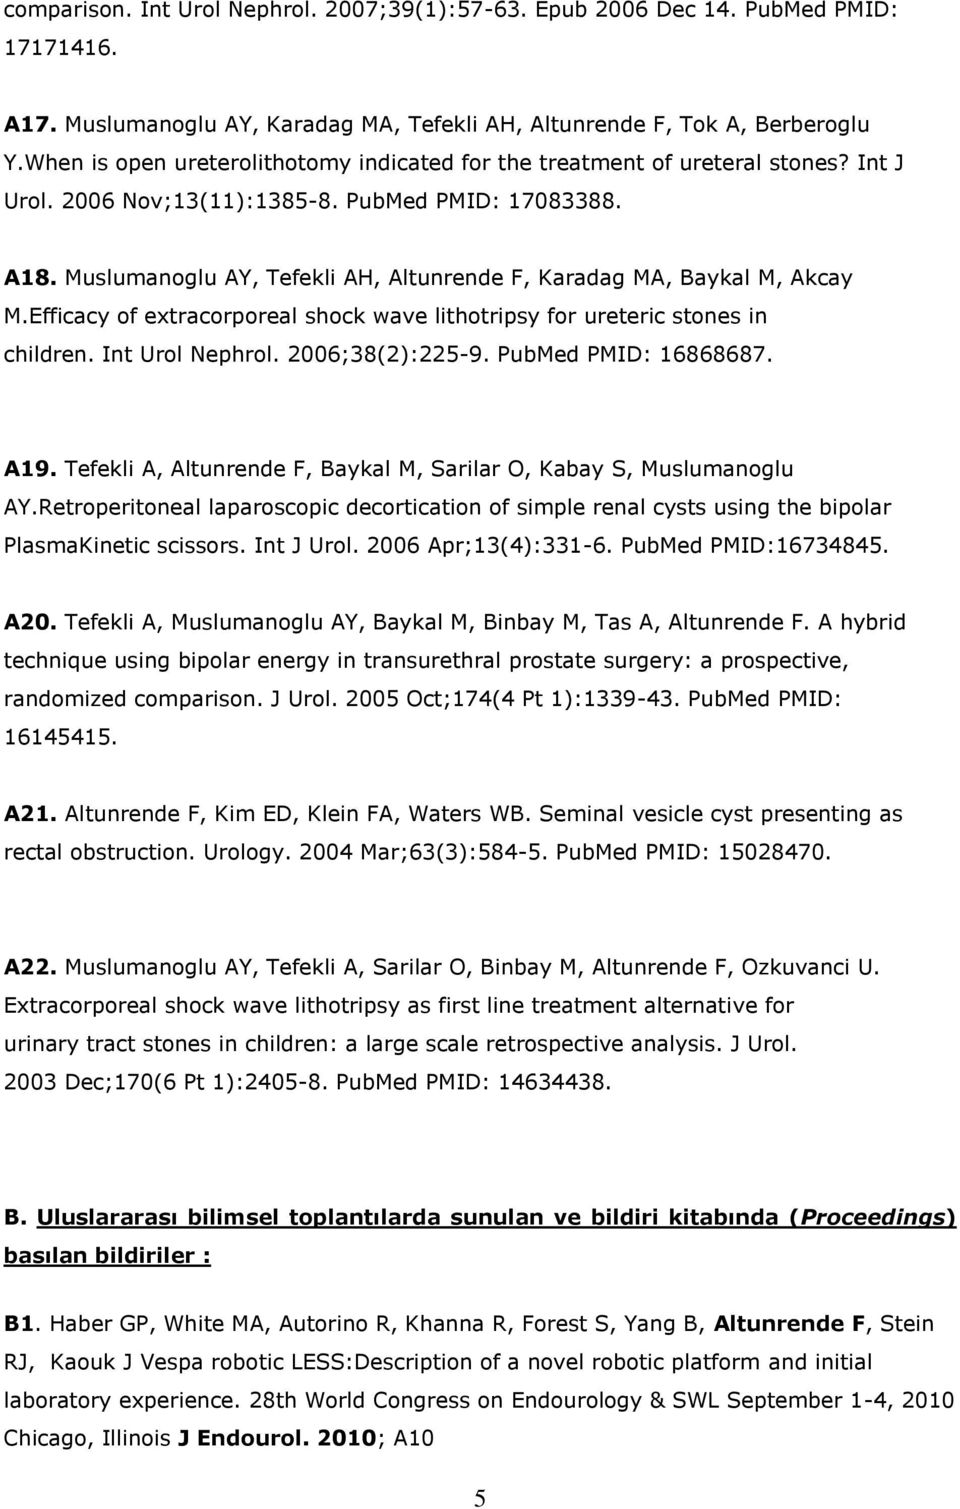 Muslumanoglu AY, Tefekli AH, Altunrende F, Karadag MA, Baykal M, Akcay M.Efficacy of extracorporeal shock wave lithotripsy for ureteric stones in children. Int Urol Nephrol. 2006;38(2):225-9.